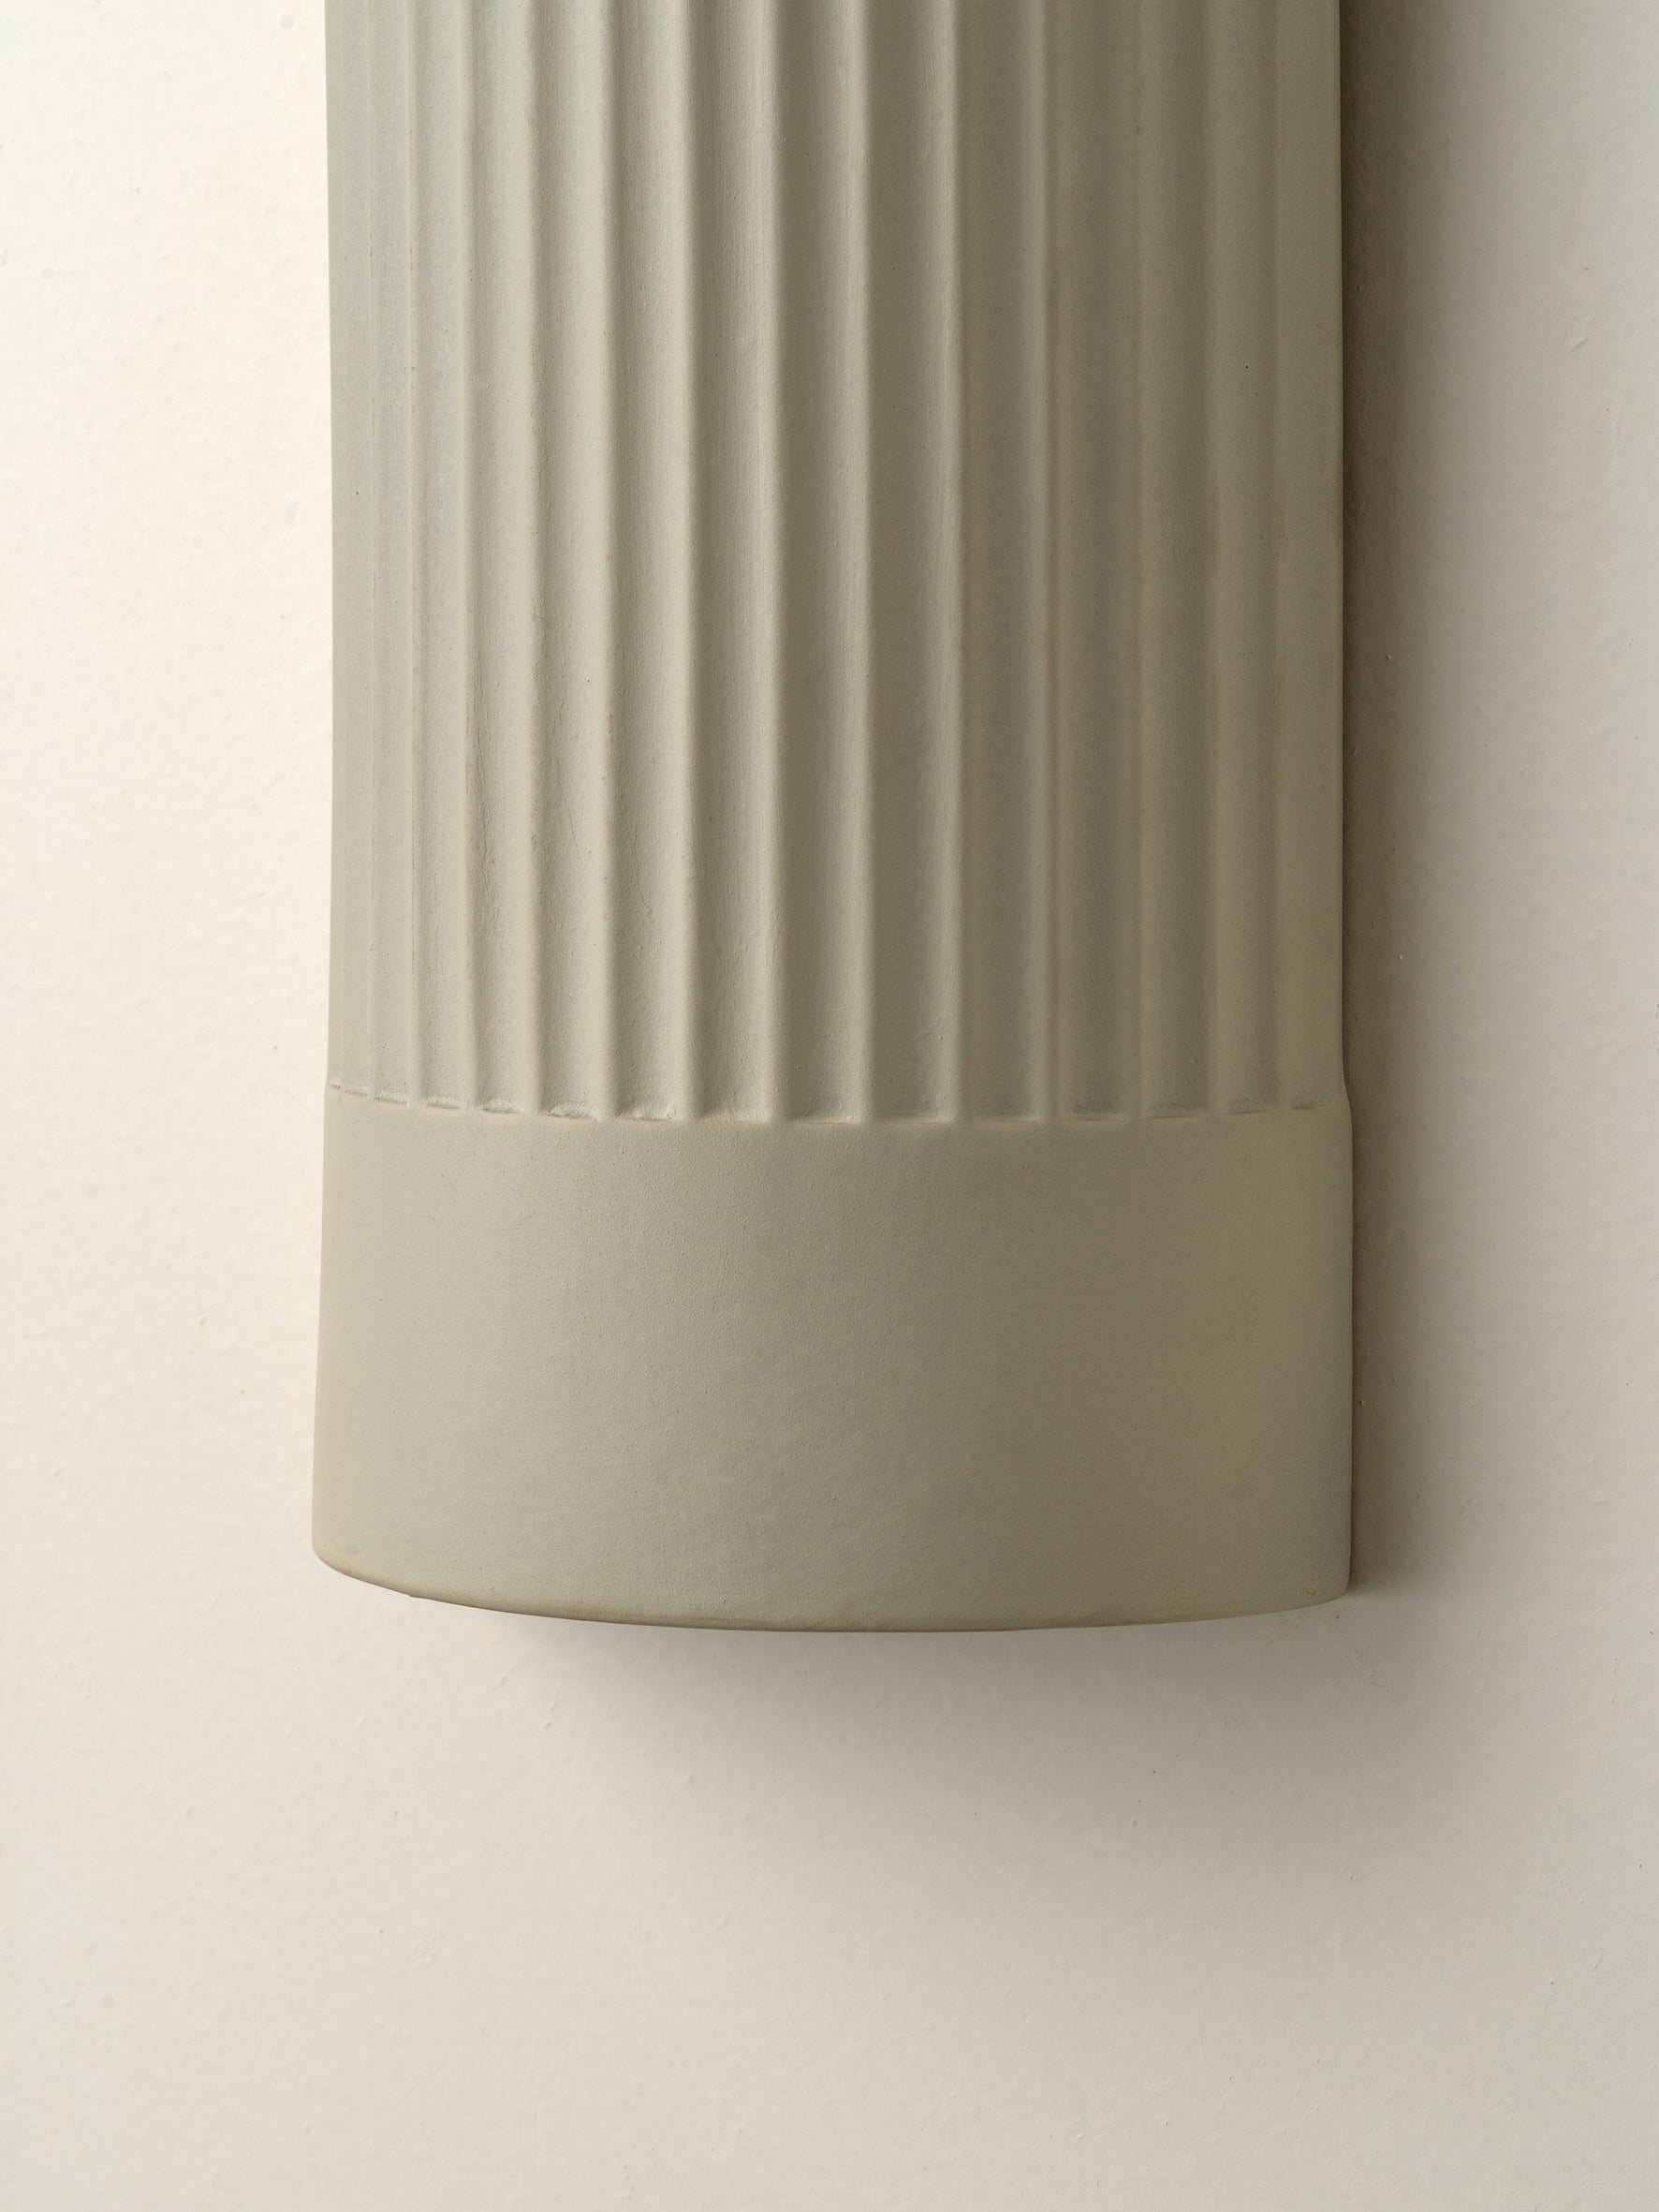 Enza - warm white  ribbed concrete wall light | Wall Light | Lights & Lamps | UK | Modern Affordable Designer Lighting